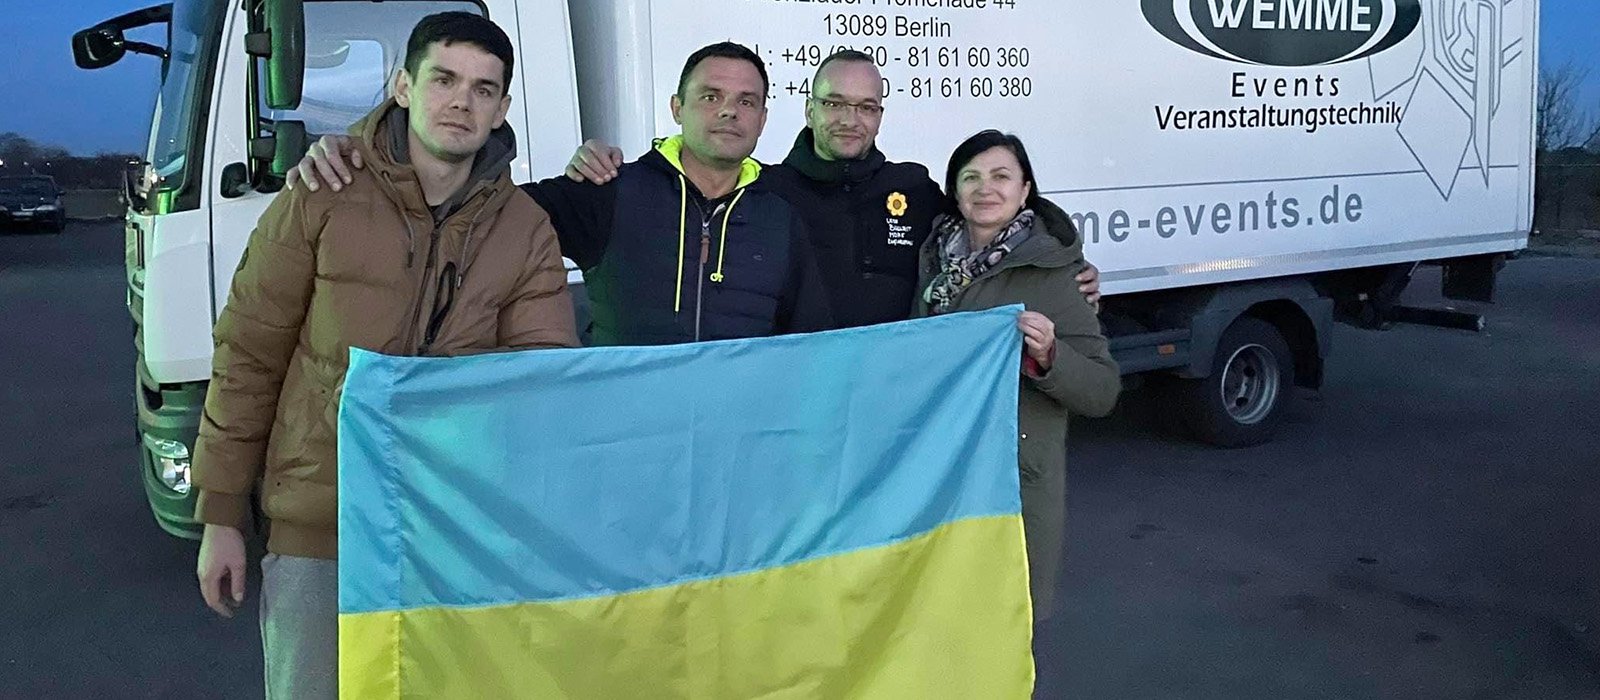 European NANOGers "Keep Ukraine Connected"